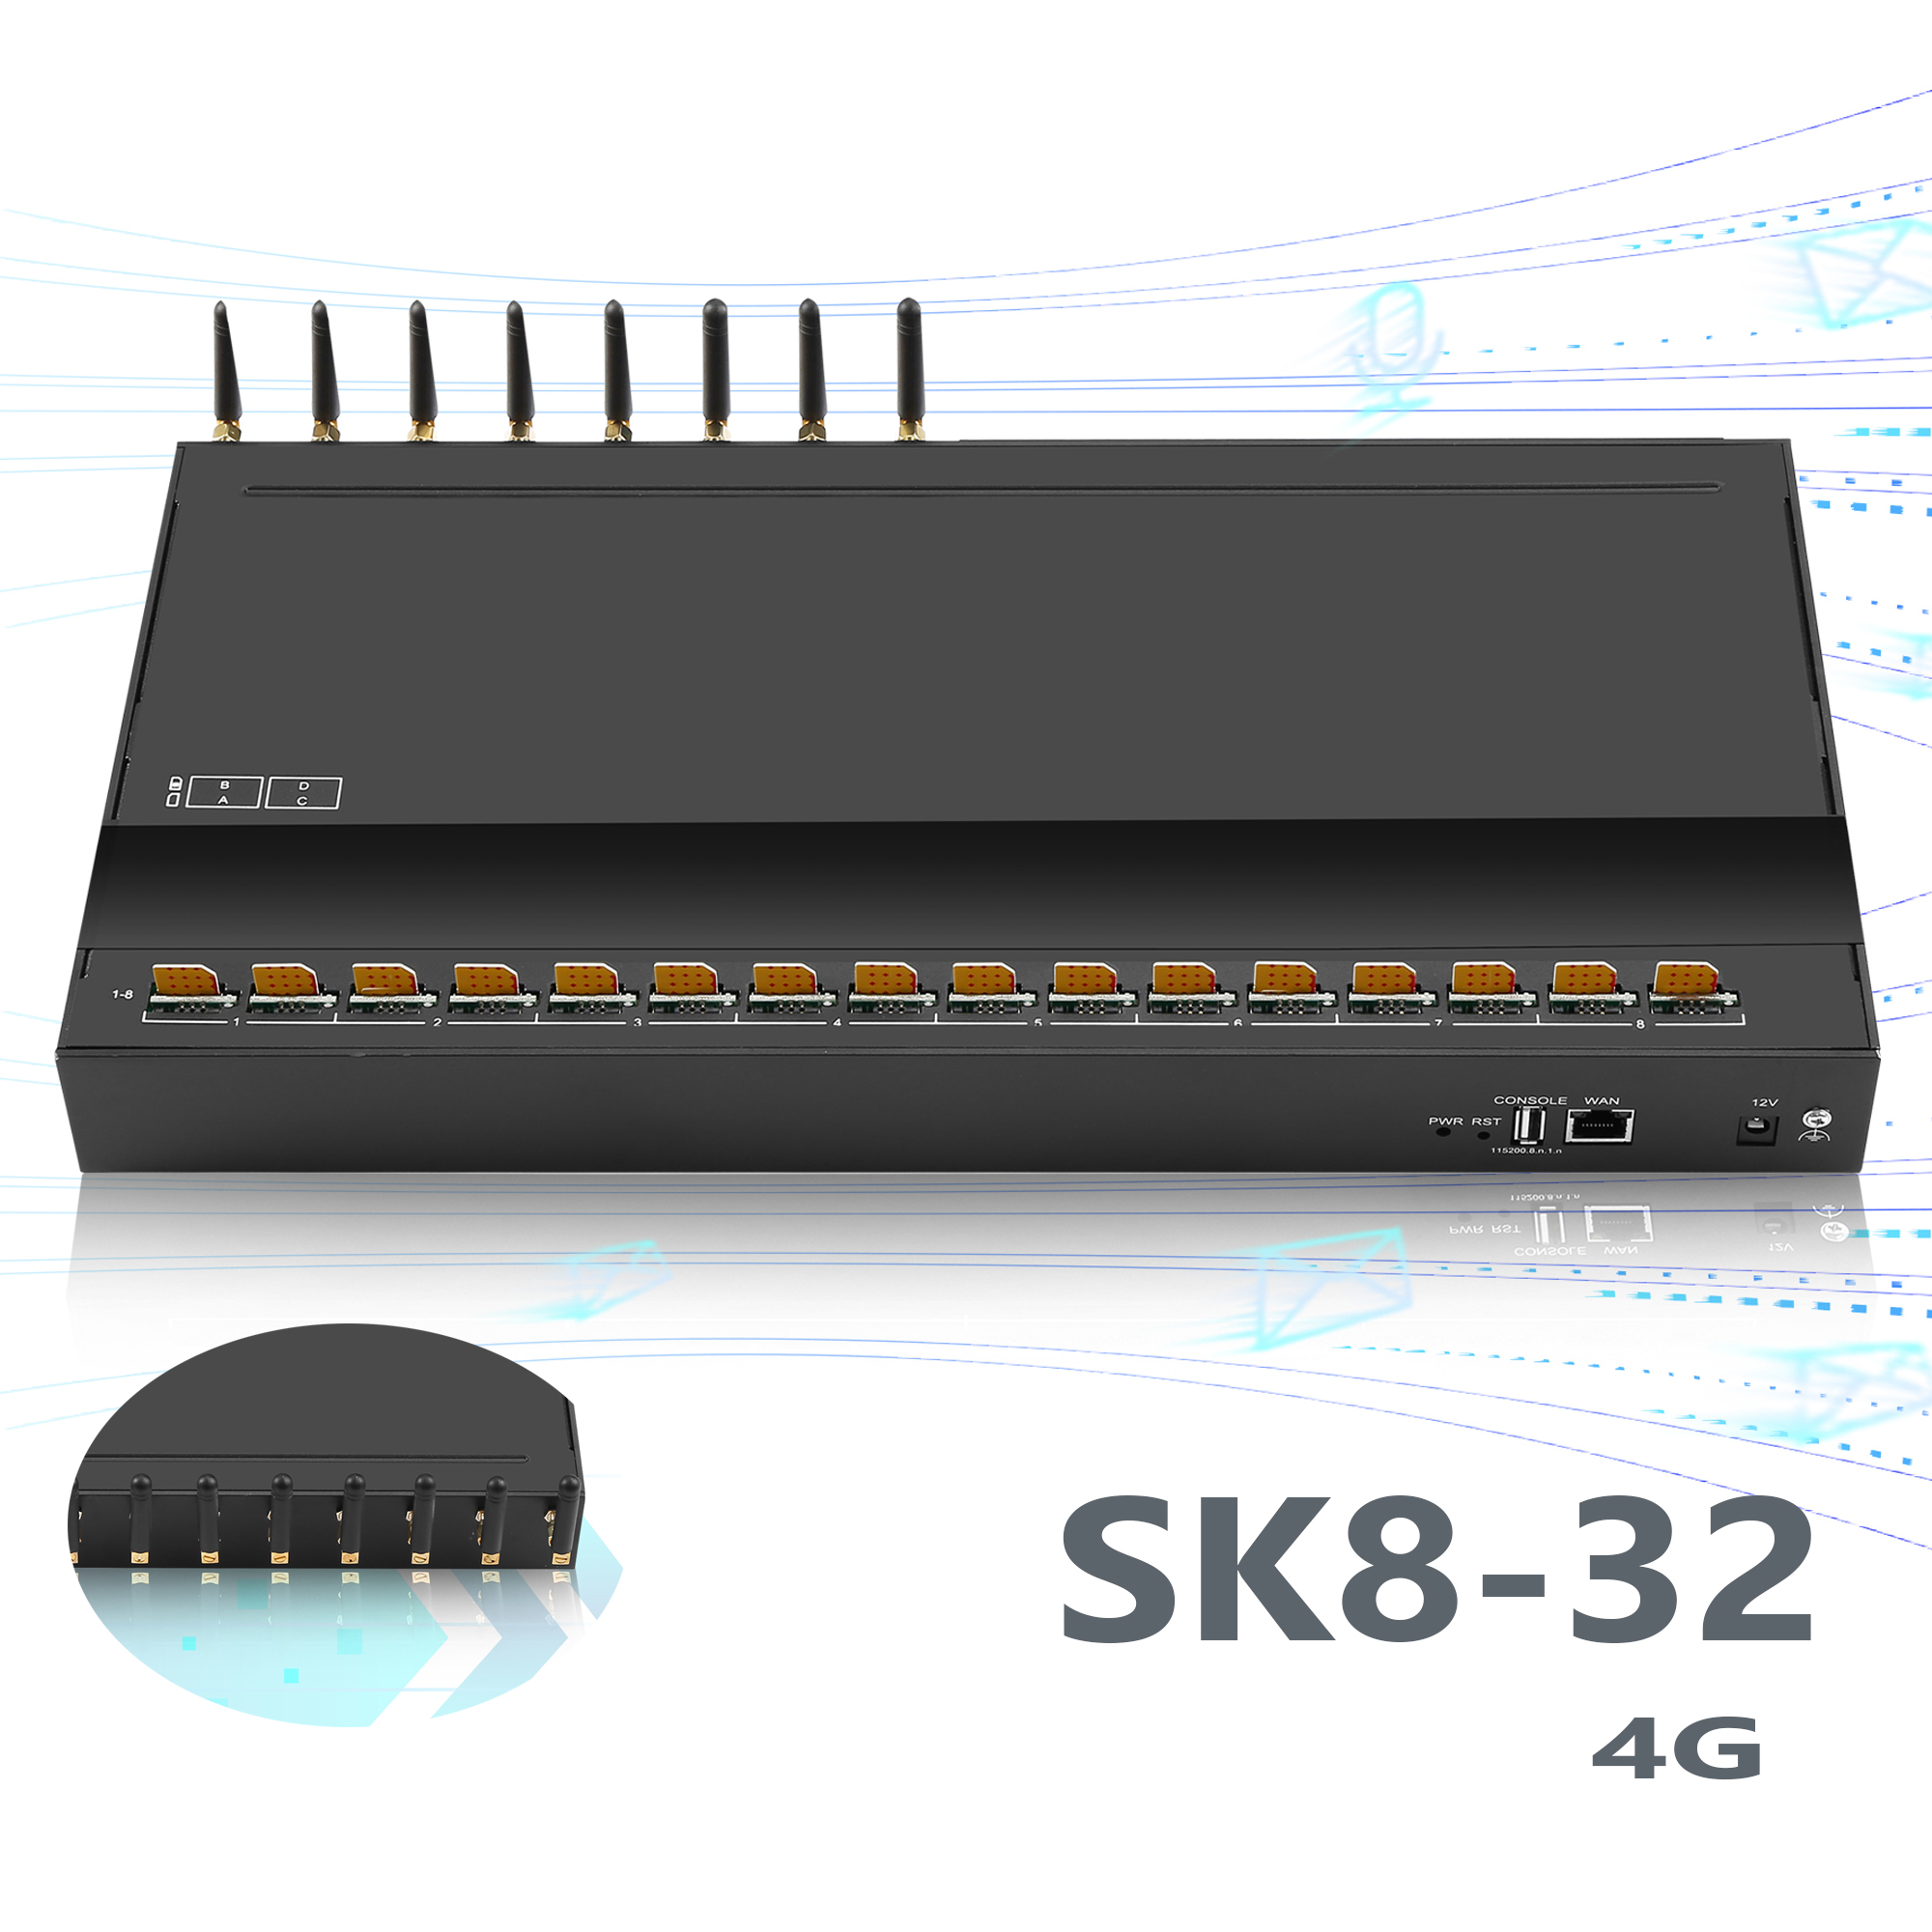  wholesale Skyline SMS Gateway sk 8 puertos módem sms Productos Voip API HTTP SMPP conectar 8 puertos 32 tarjeta sim envío directo de sms GSM sim box